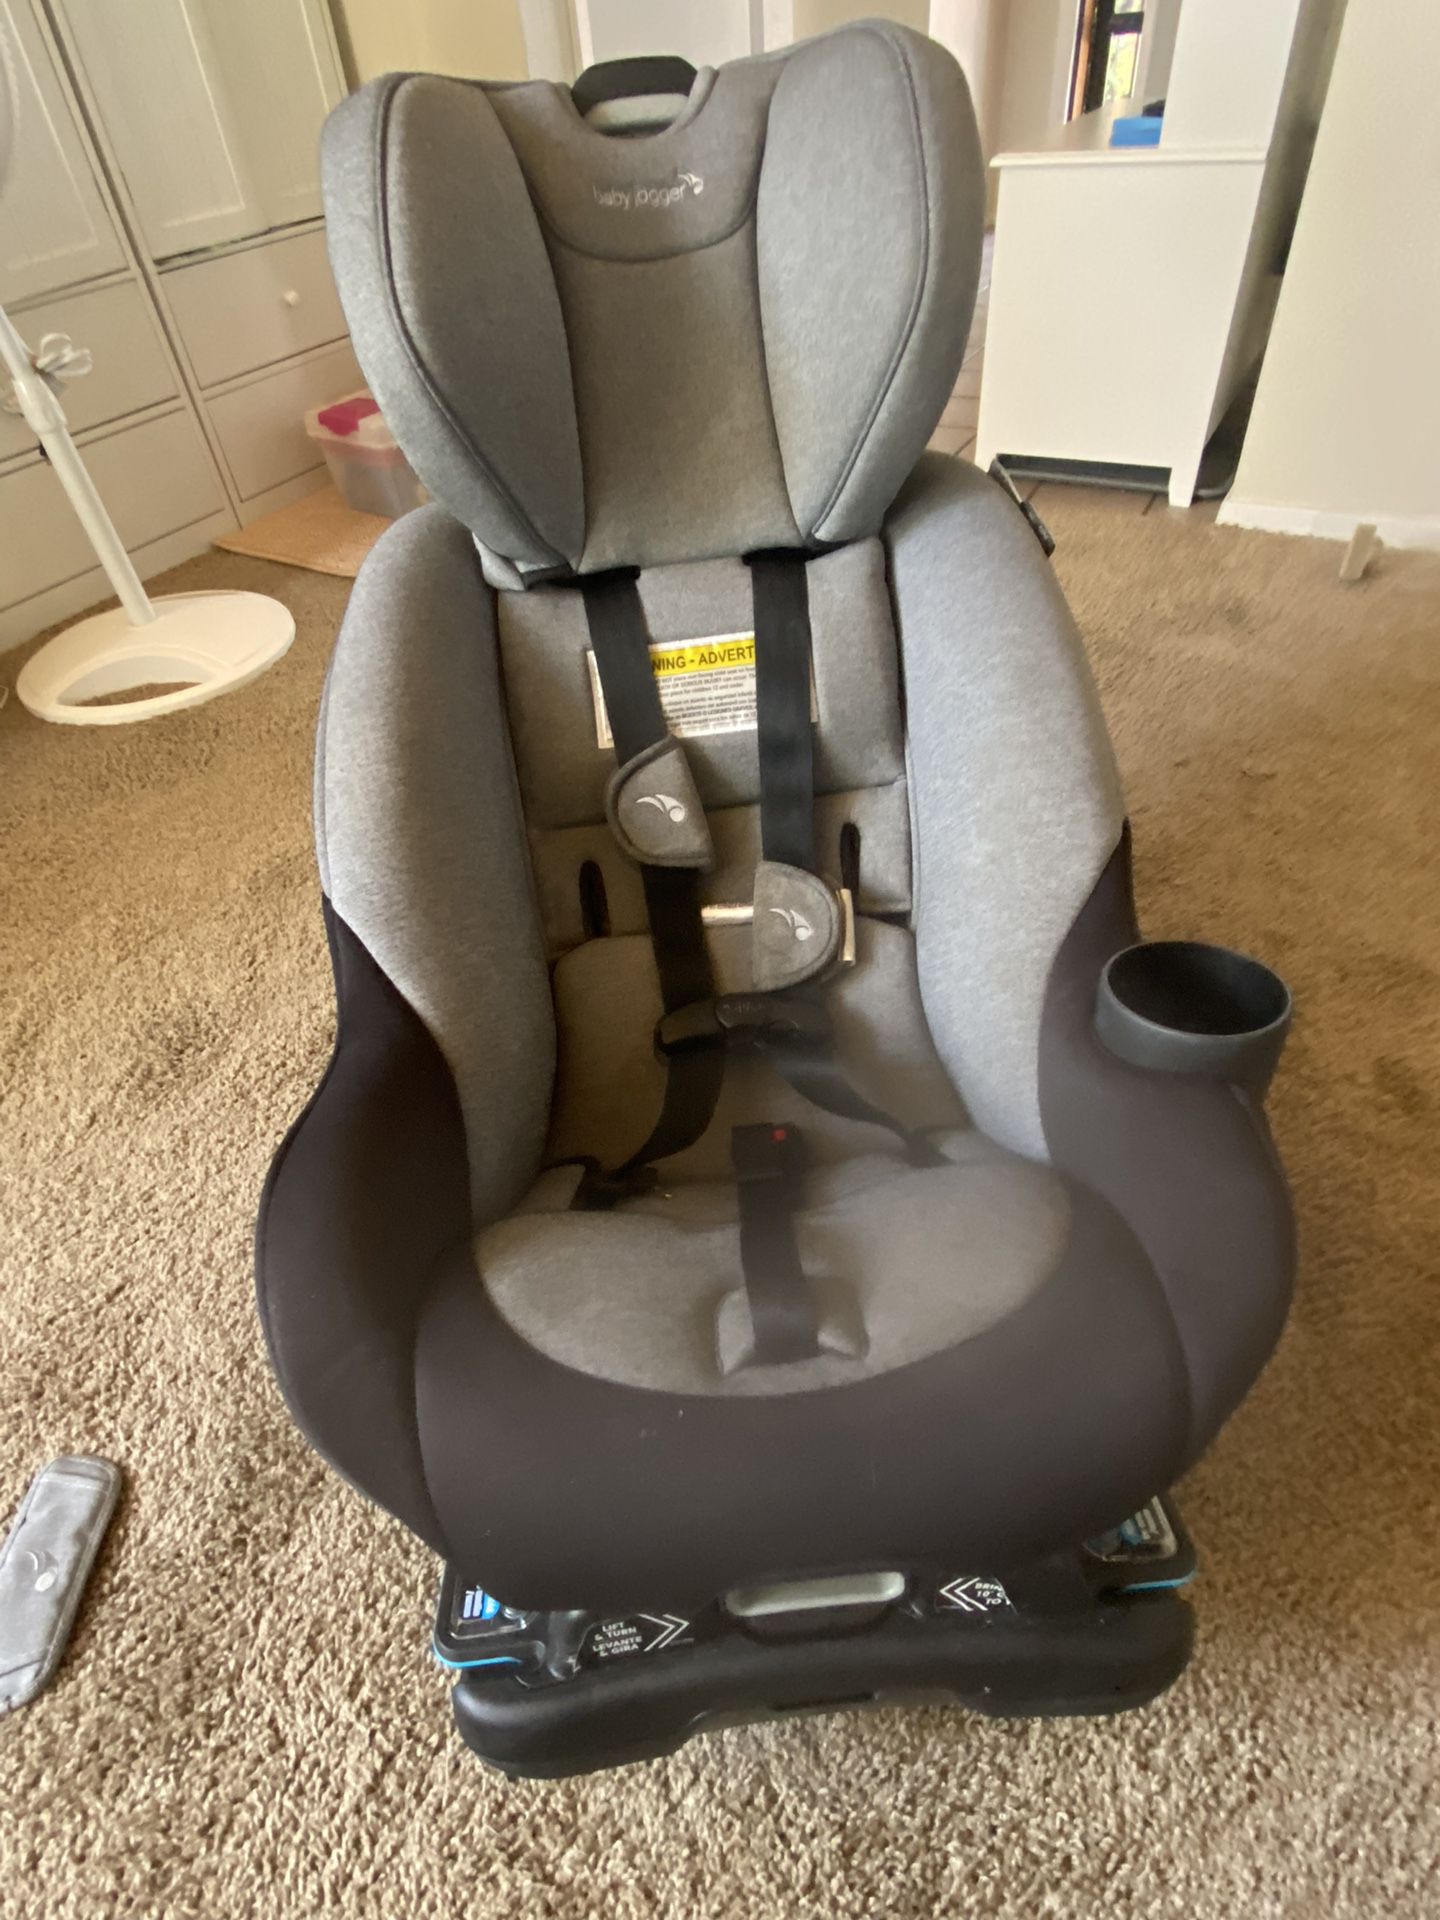 Baby Jogger City Turn Car Seat